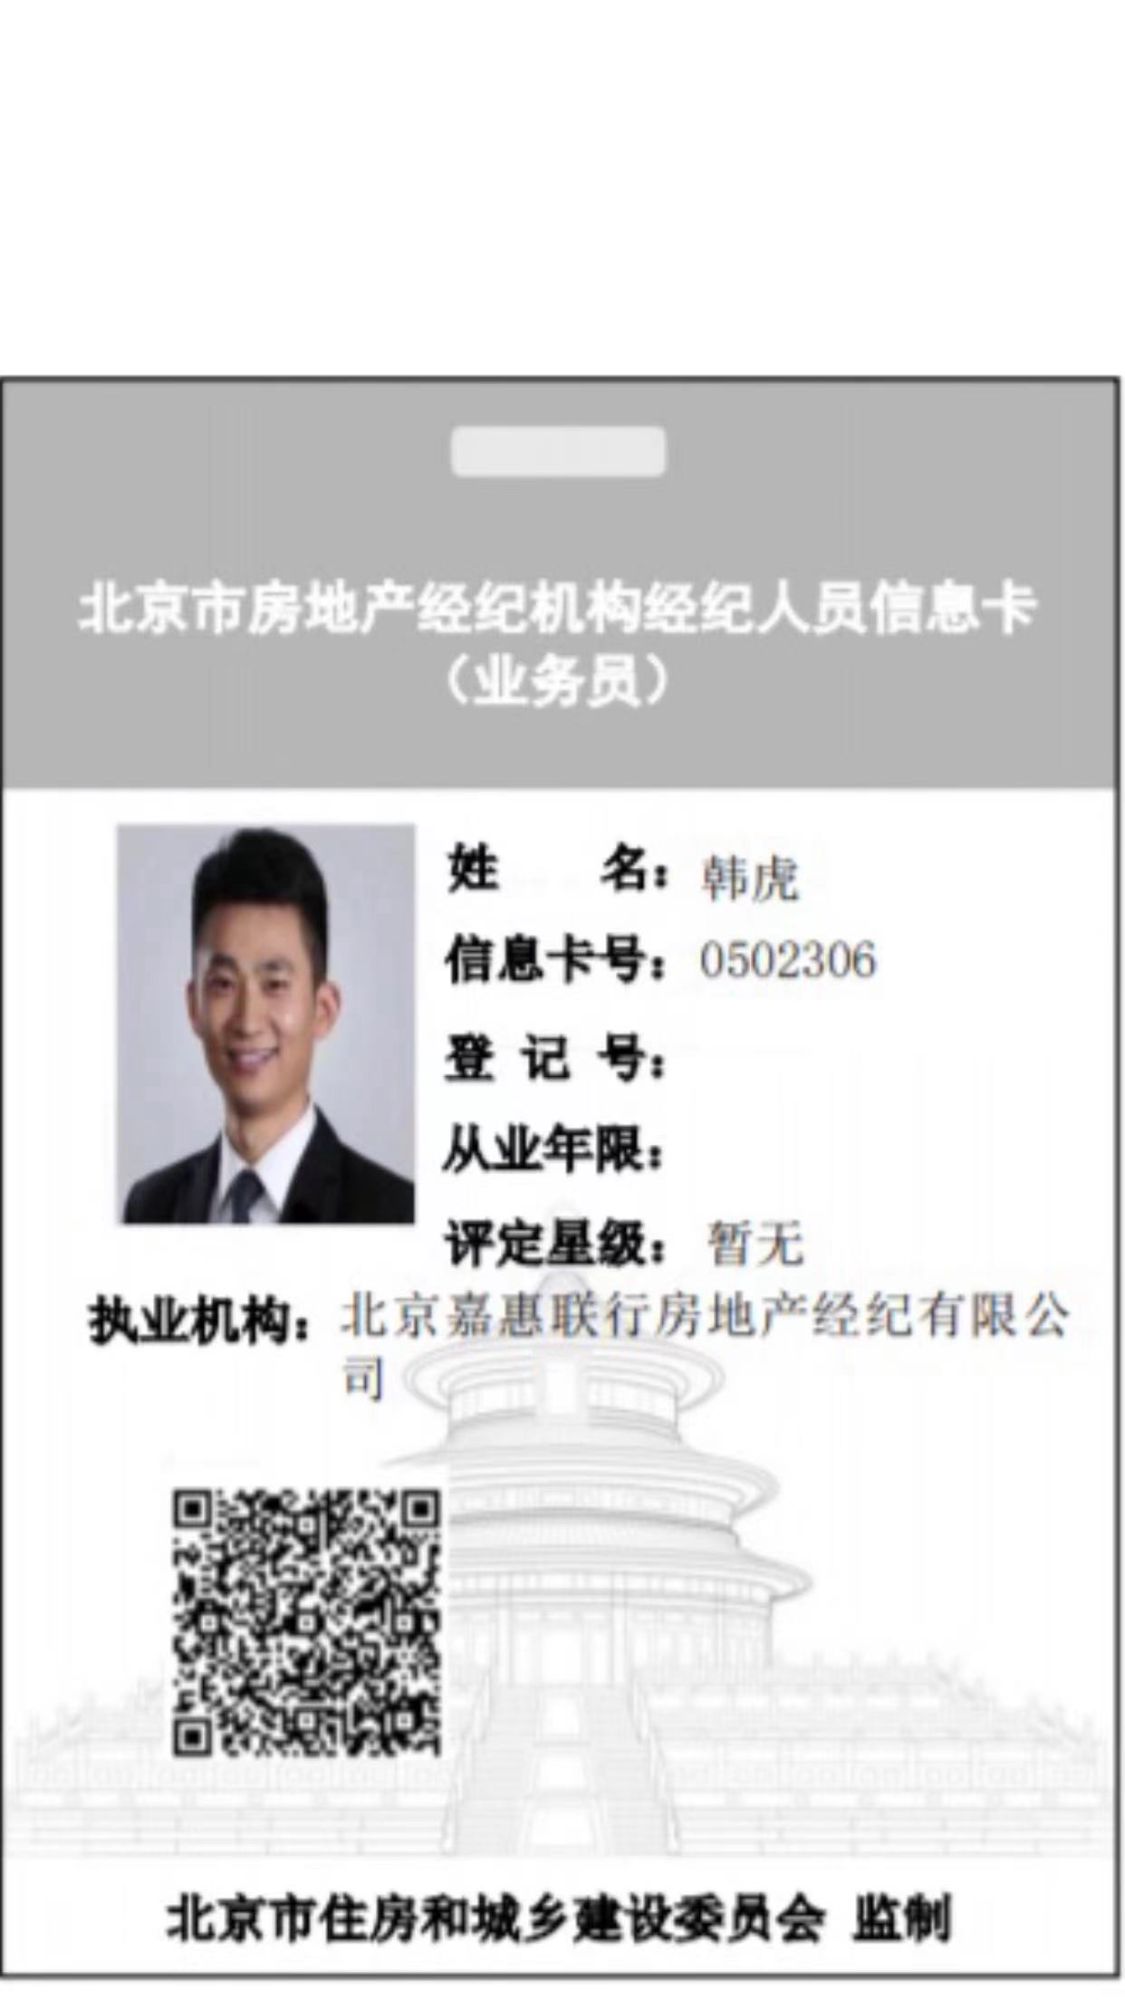  Employment information card